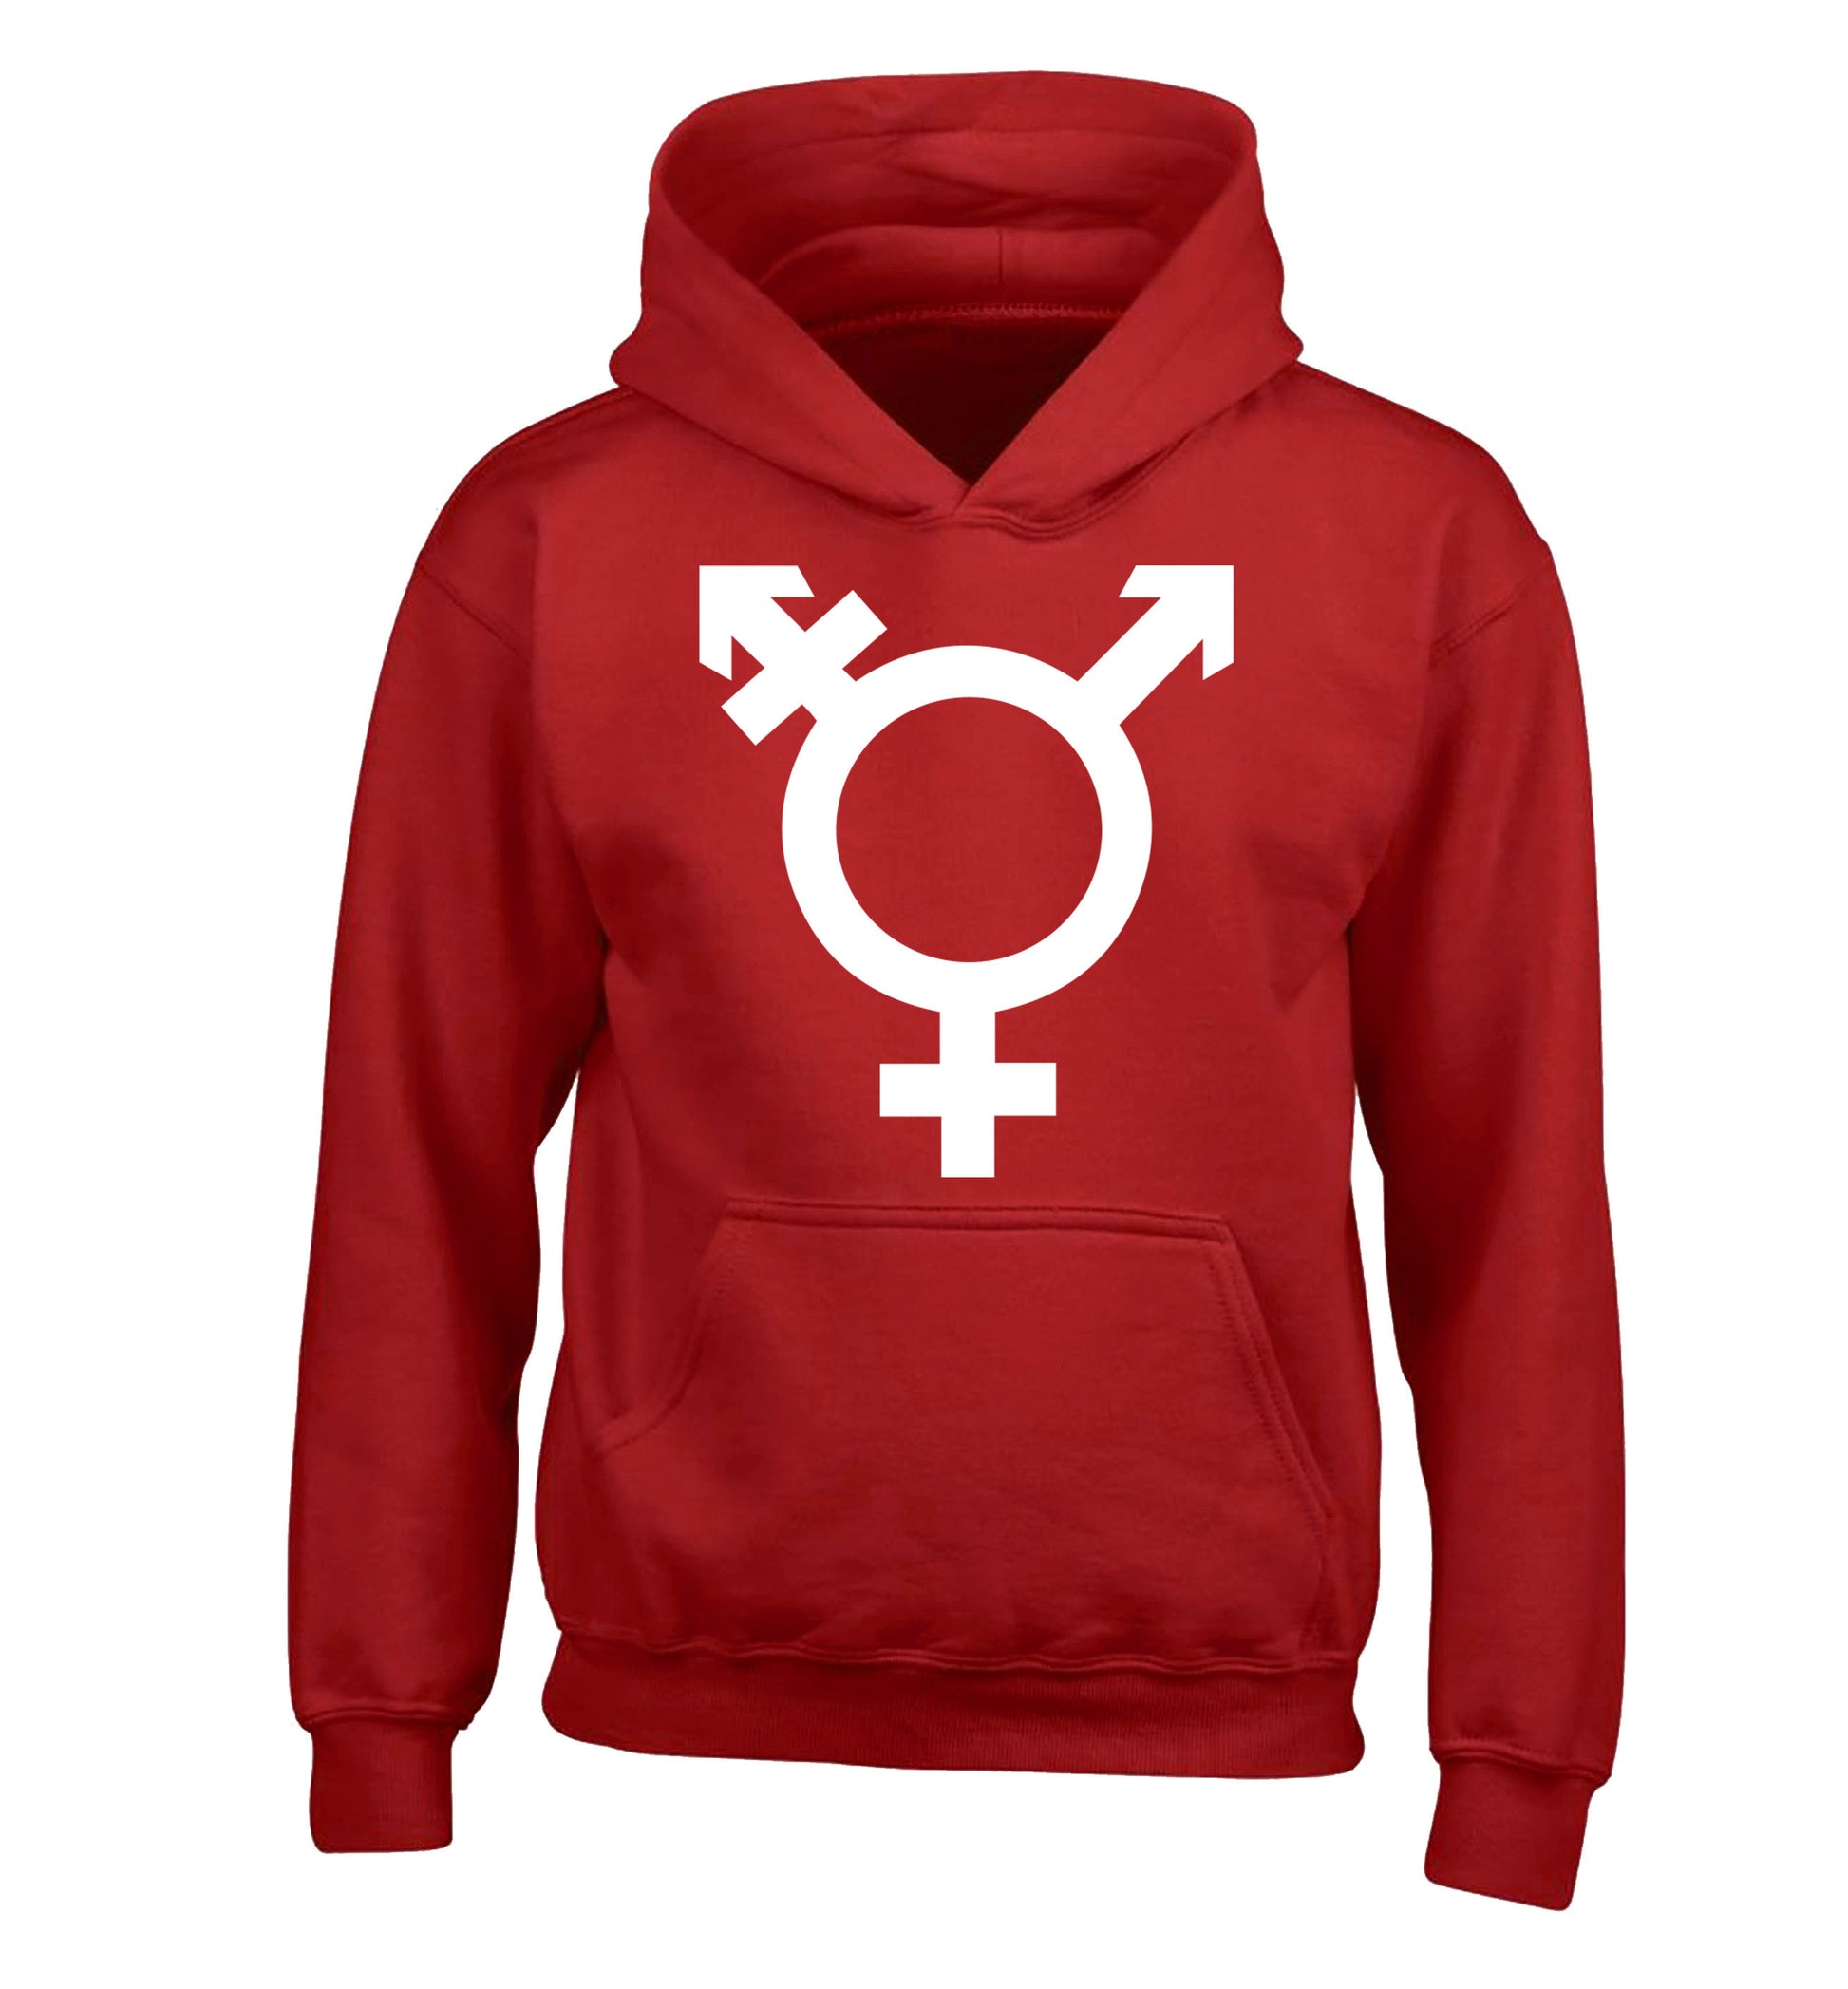 Gender neutral symbol large children's red hoodie 12-14 Years